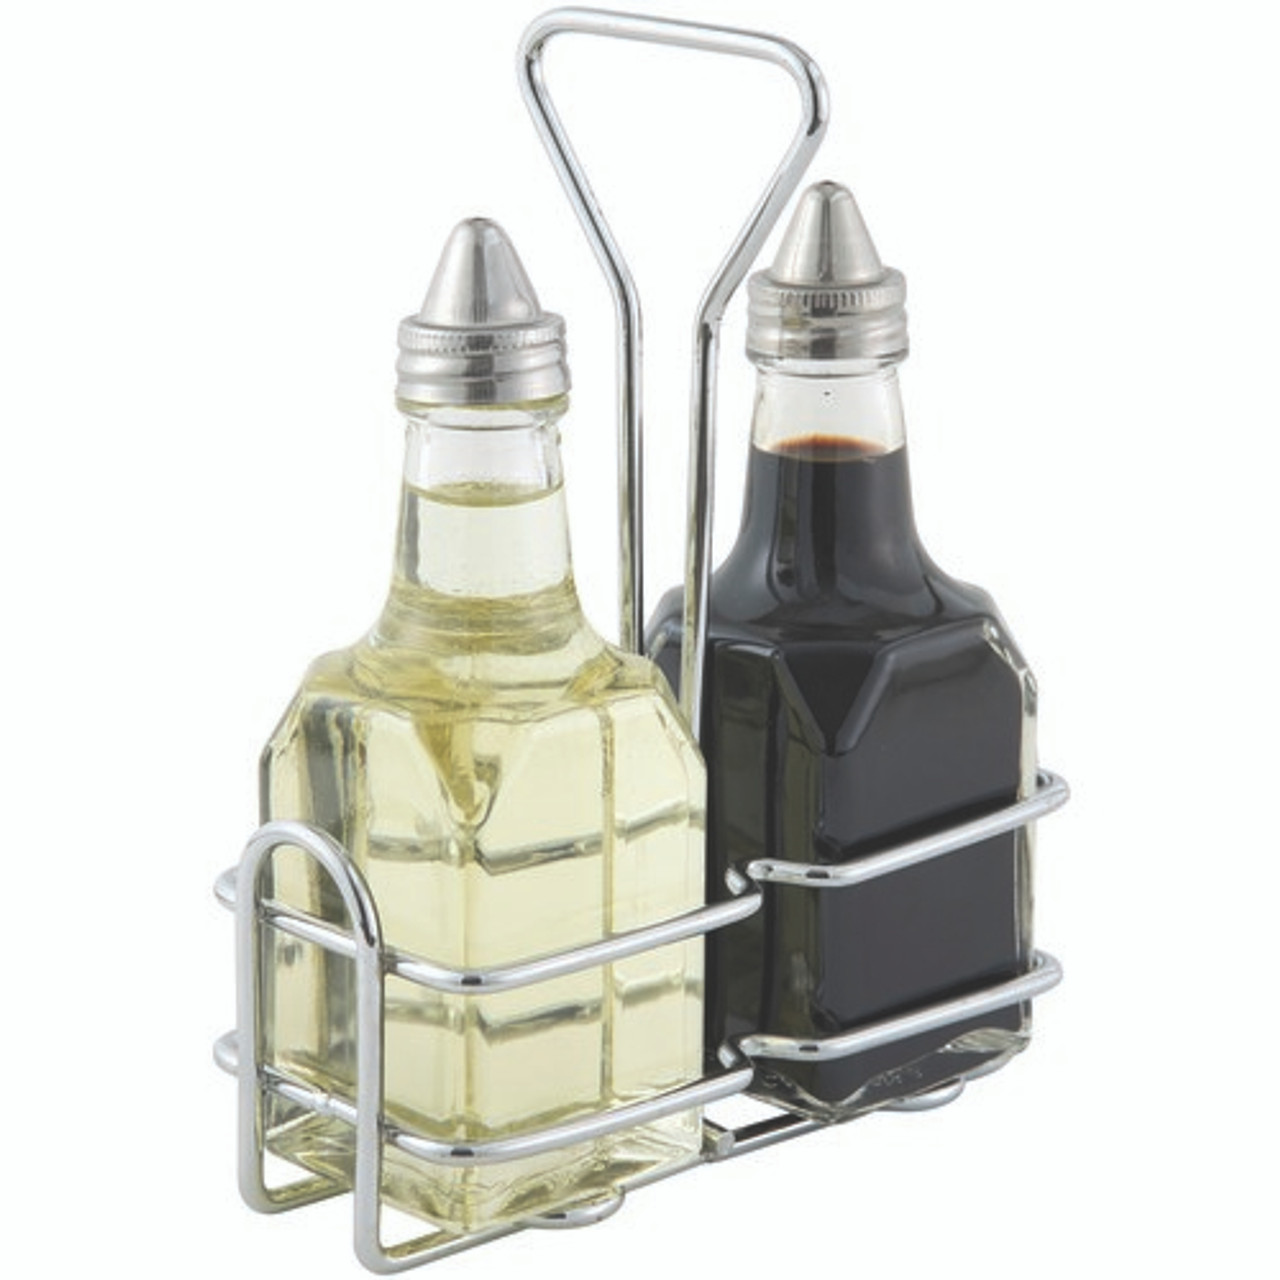 Oil & Vinegar Set, includes: (2) 6 oz. square glass cruets with lids (G-104), (1) square chrome plated wire holder